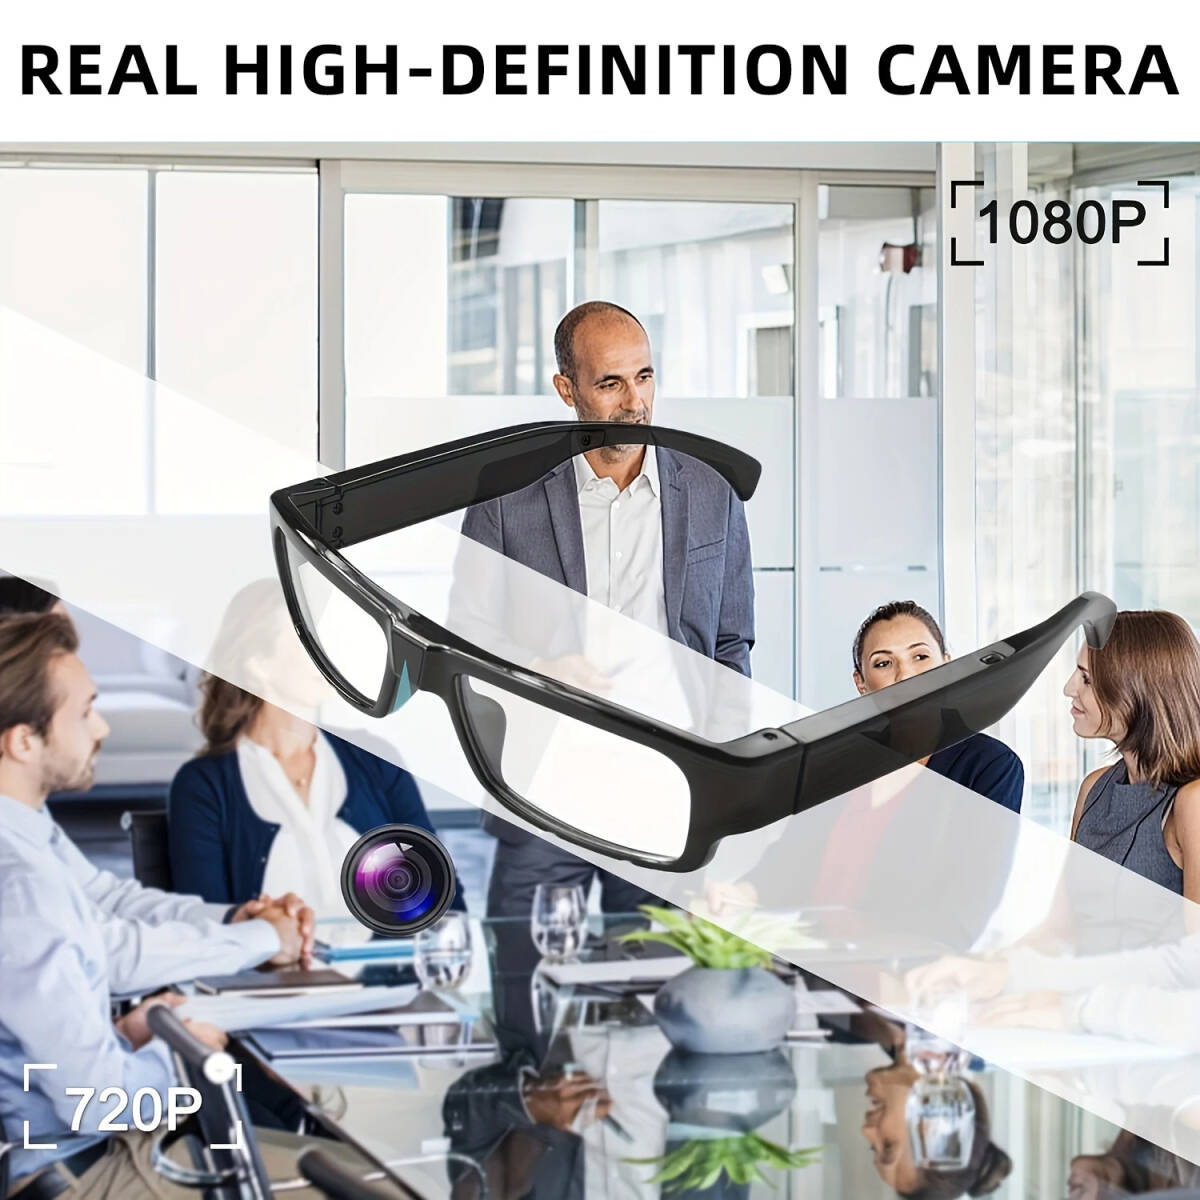 HD 1080p for cam ko-da- attaching Smart glasses outdoors Mini camera Spy video driving record cycling sport video glasses 